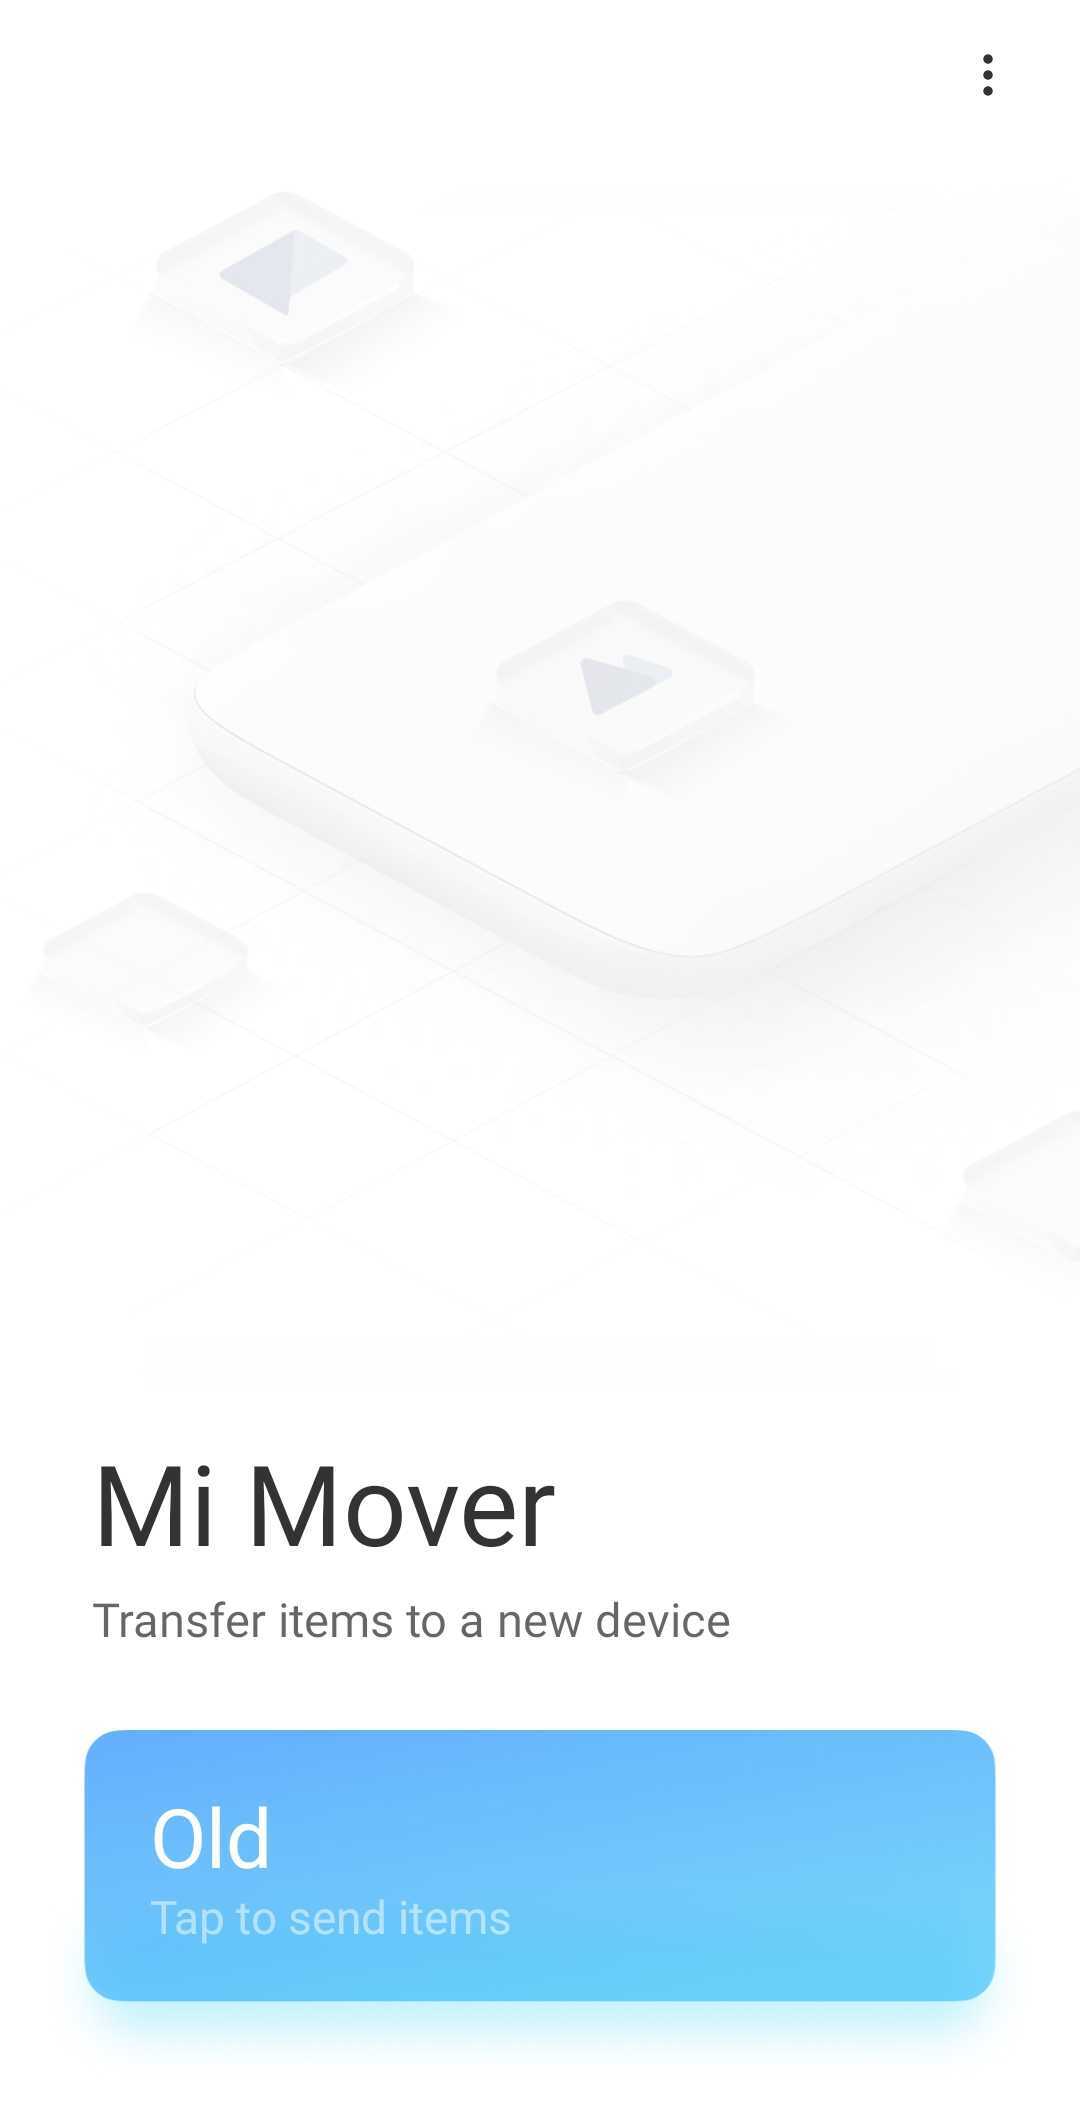 mi mover app interface on samsung